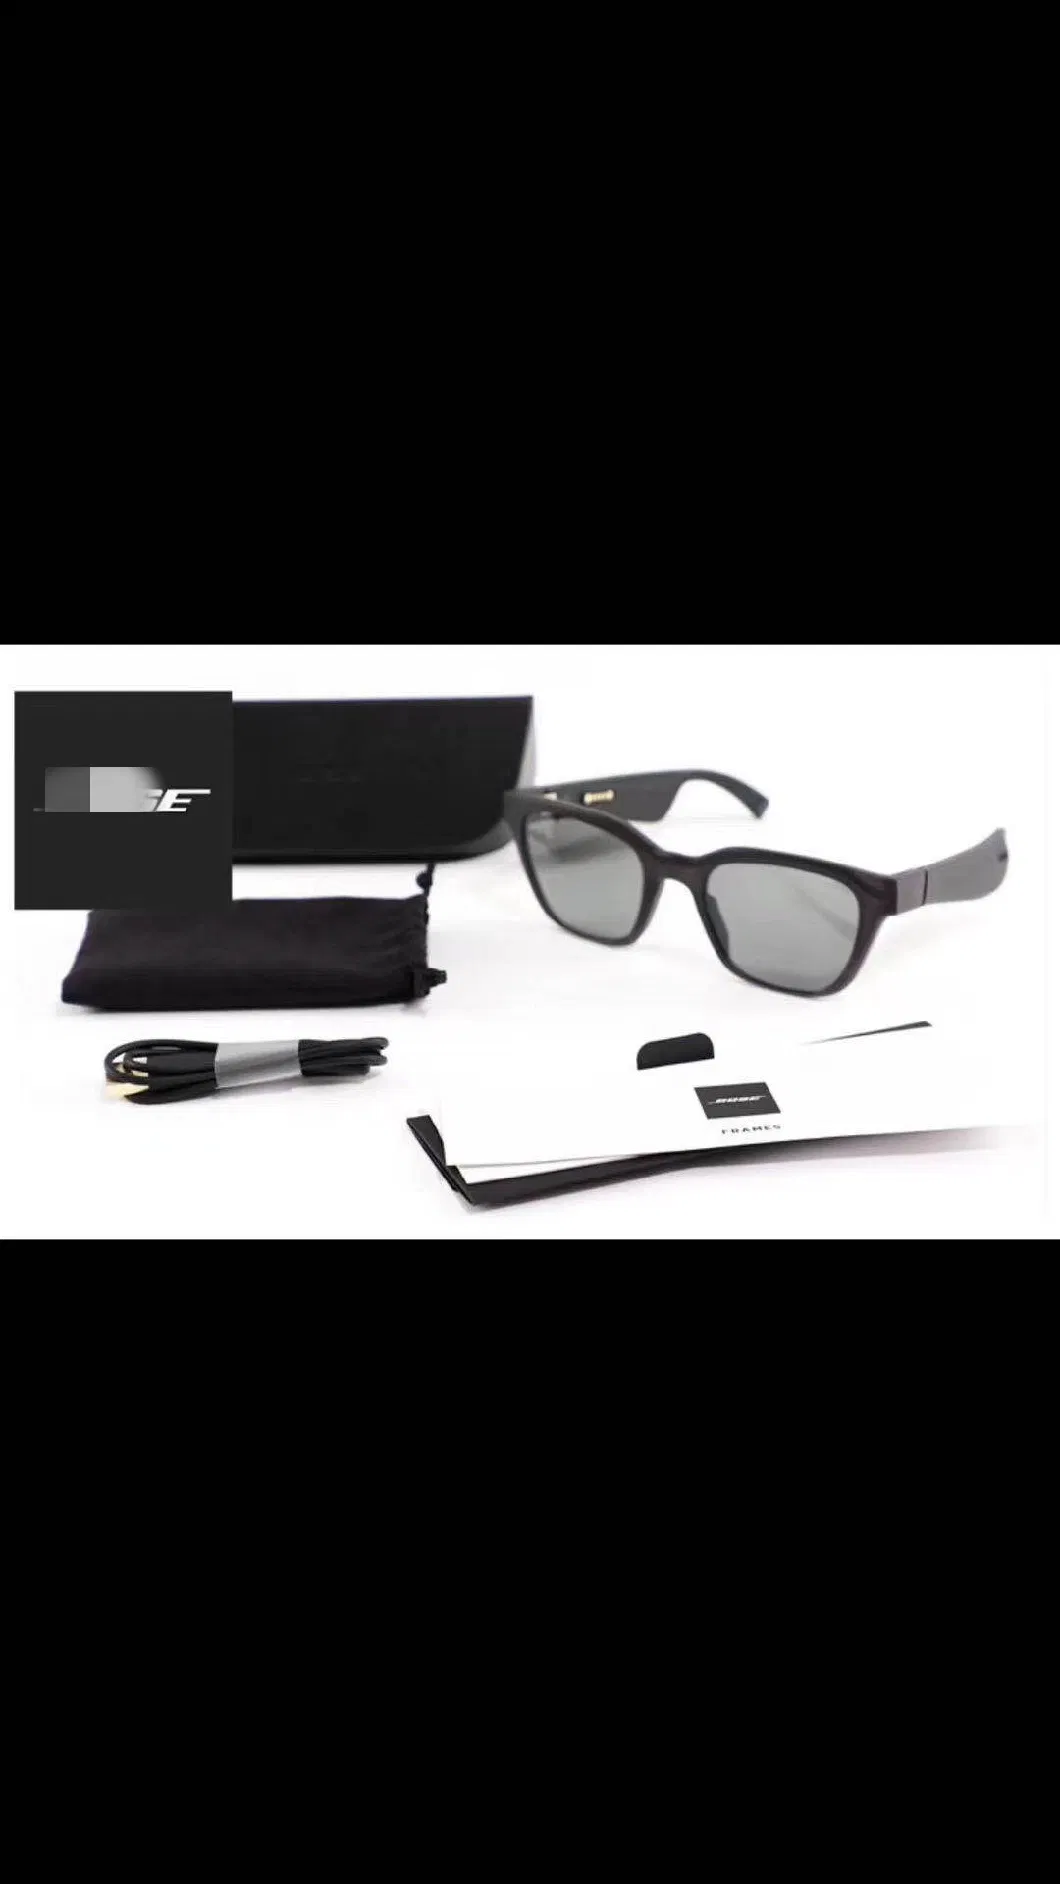 for Frames Alto Similar CE Smart Sunglasses Open Ear Headphones, Polarized, Wireless Bluetooth 5.0 Connect, Bt 5.0 Audio Music Sun Glasses